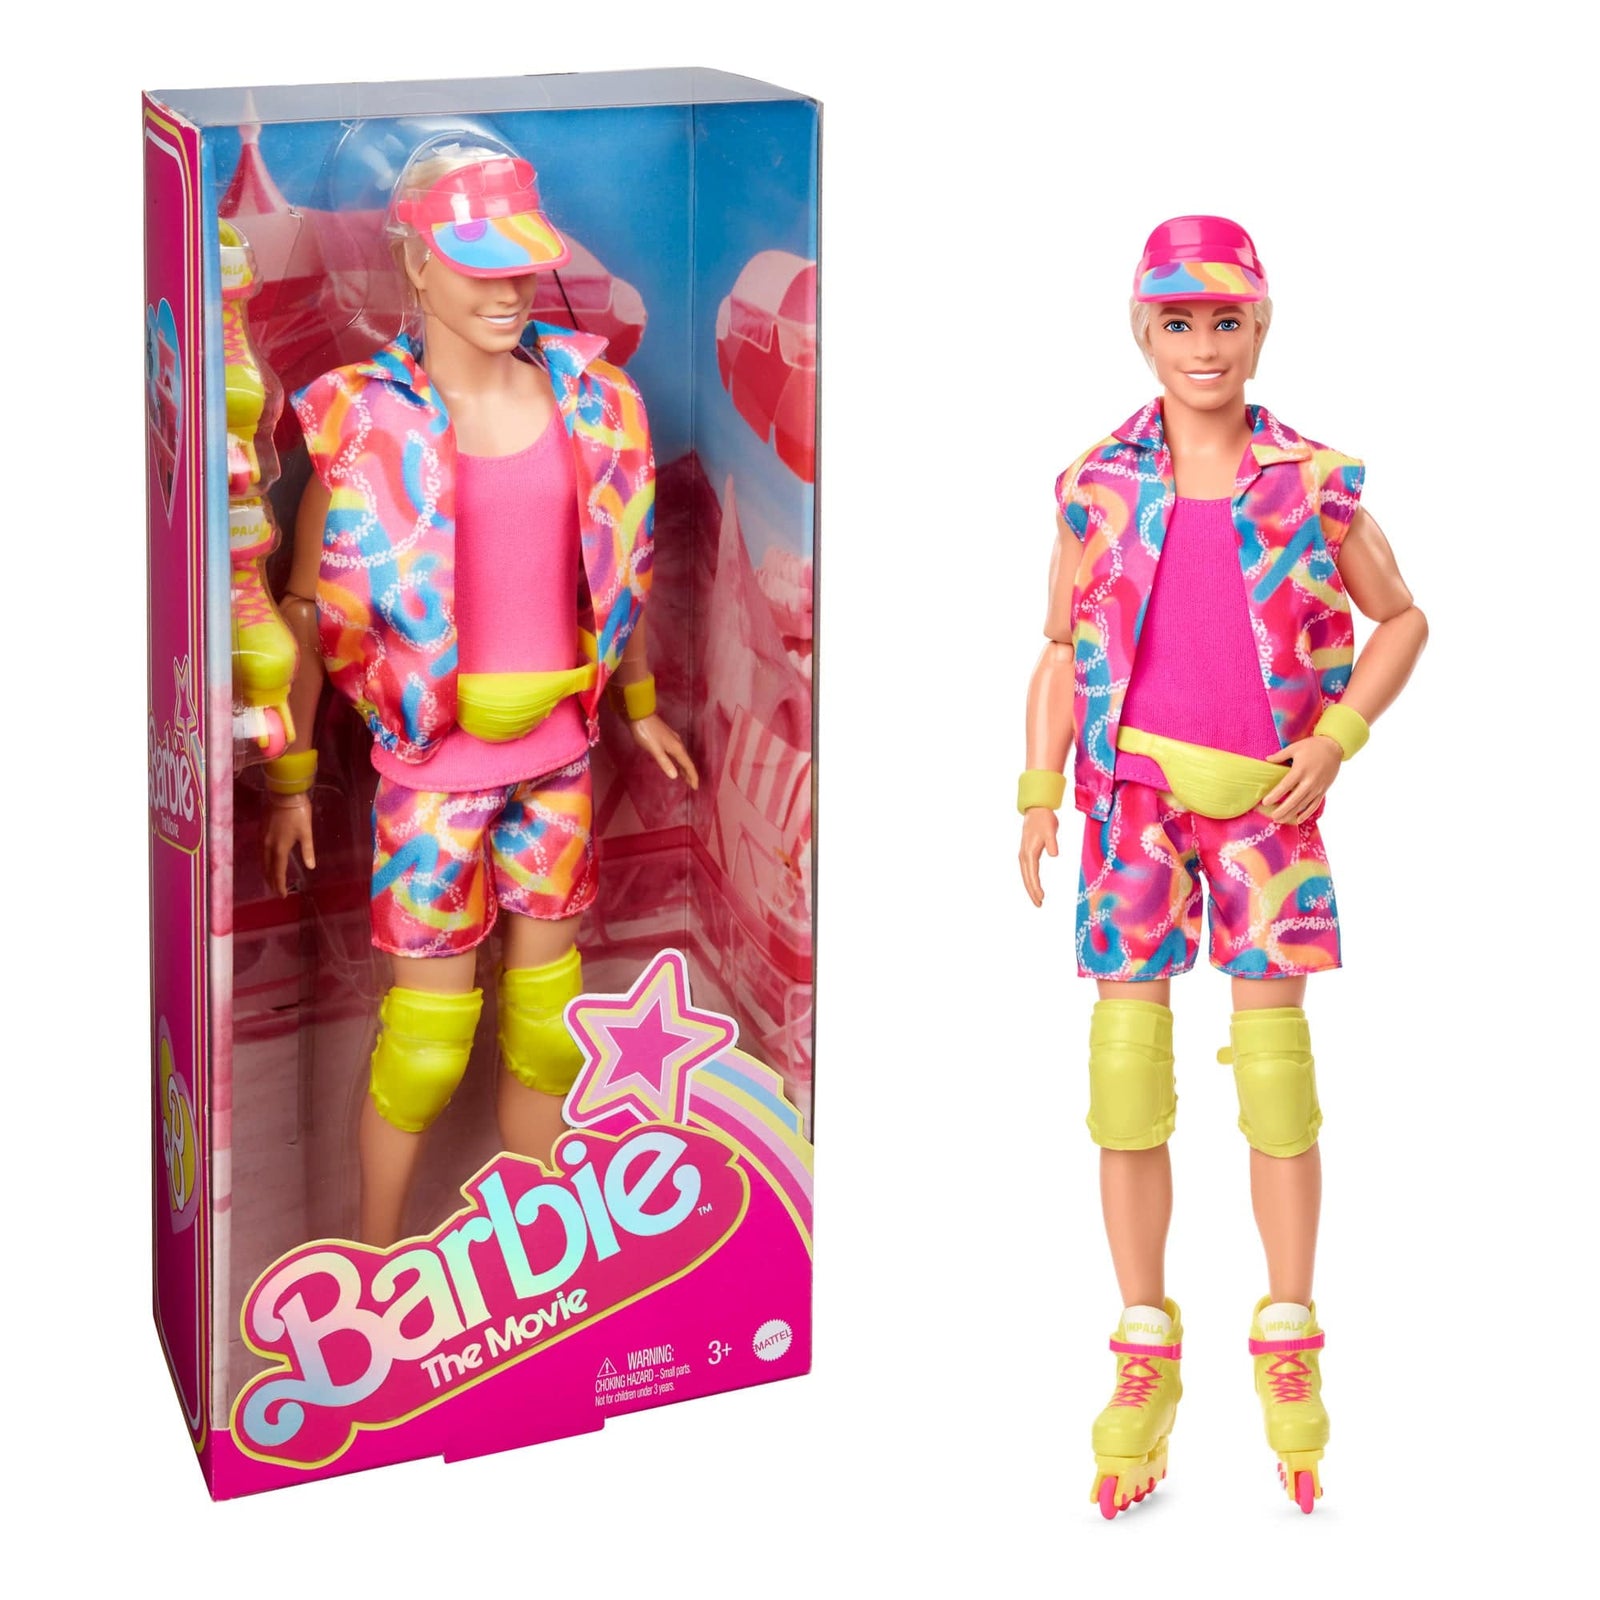 Barbie The Movie Doll, Ken